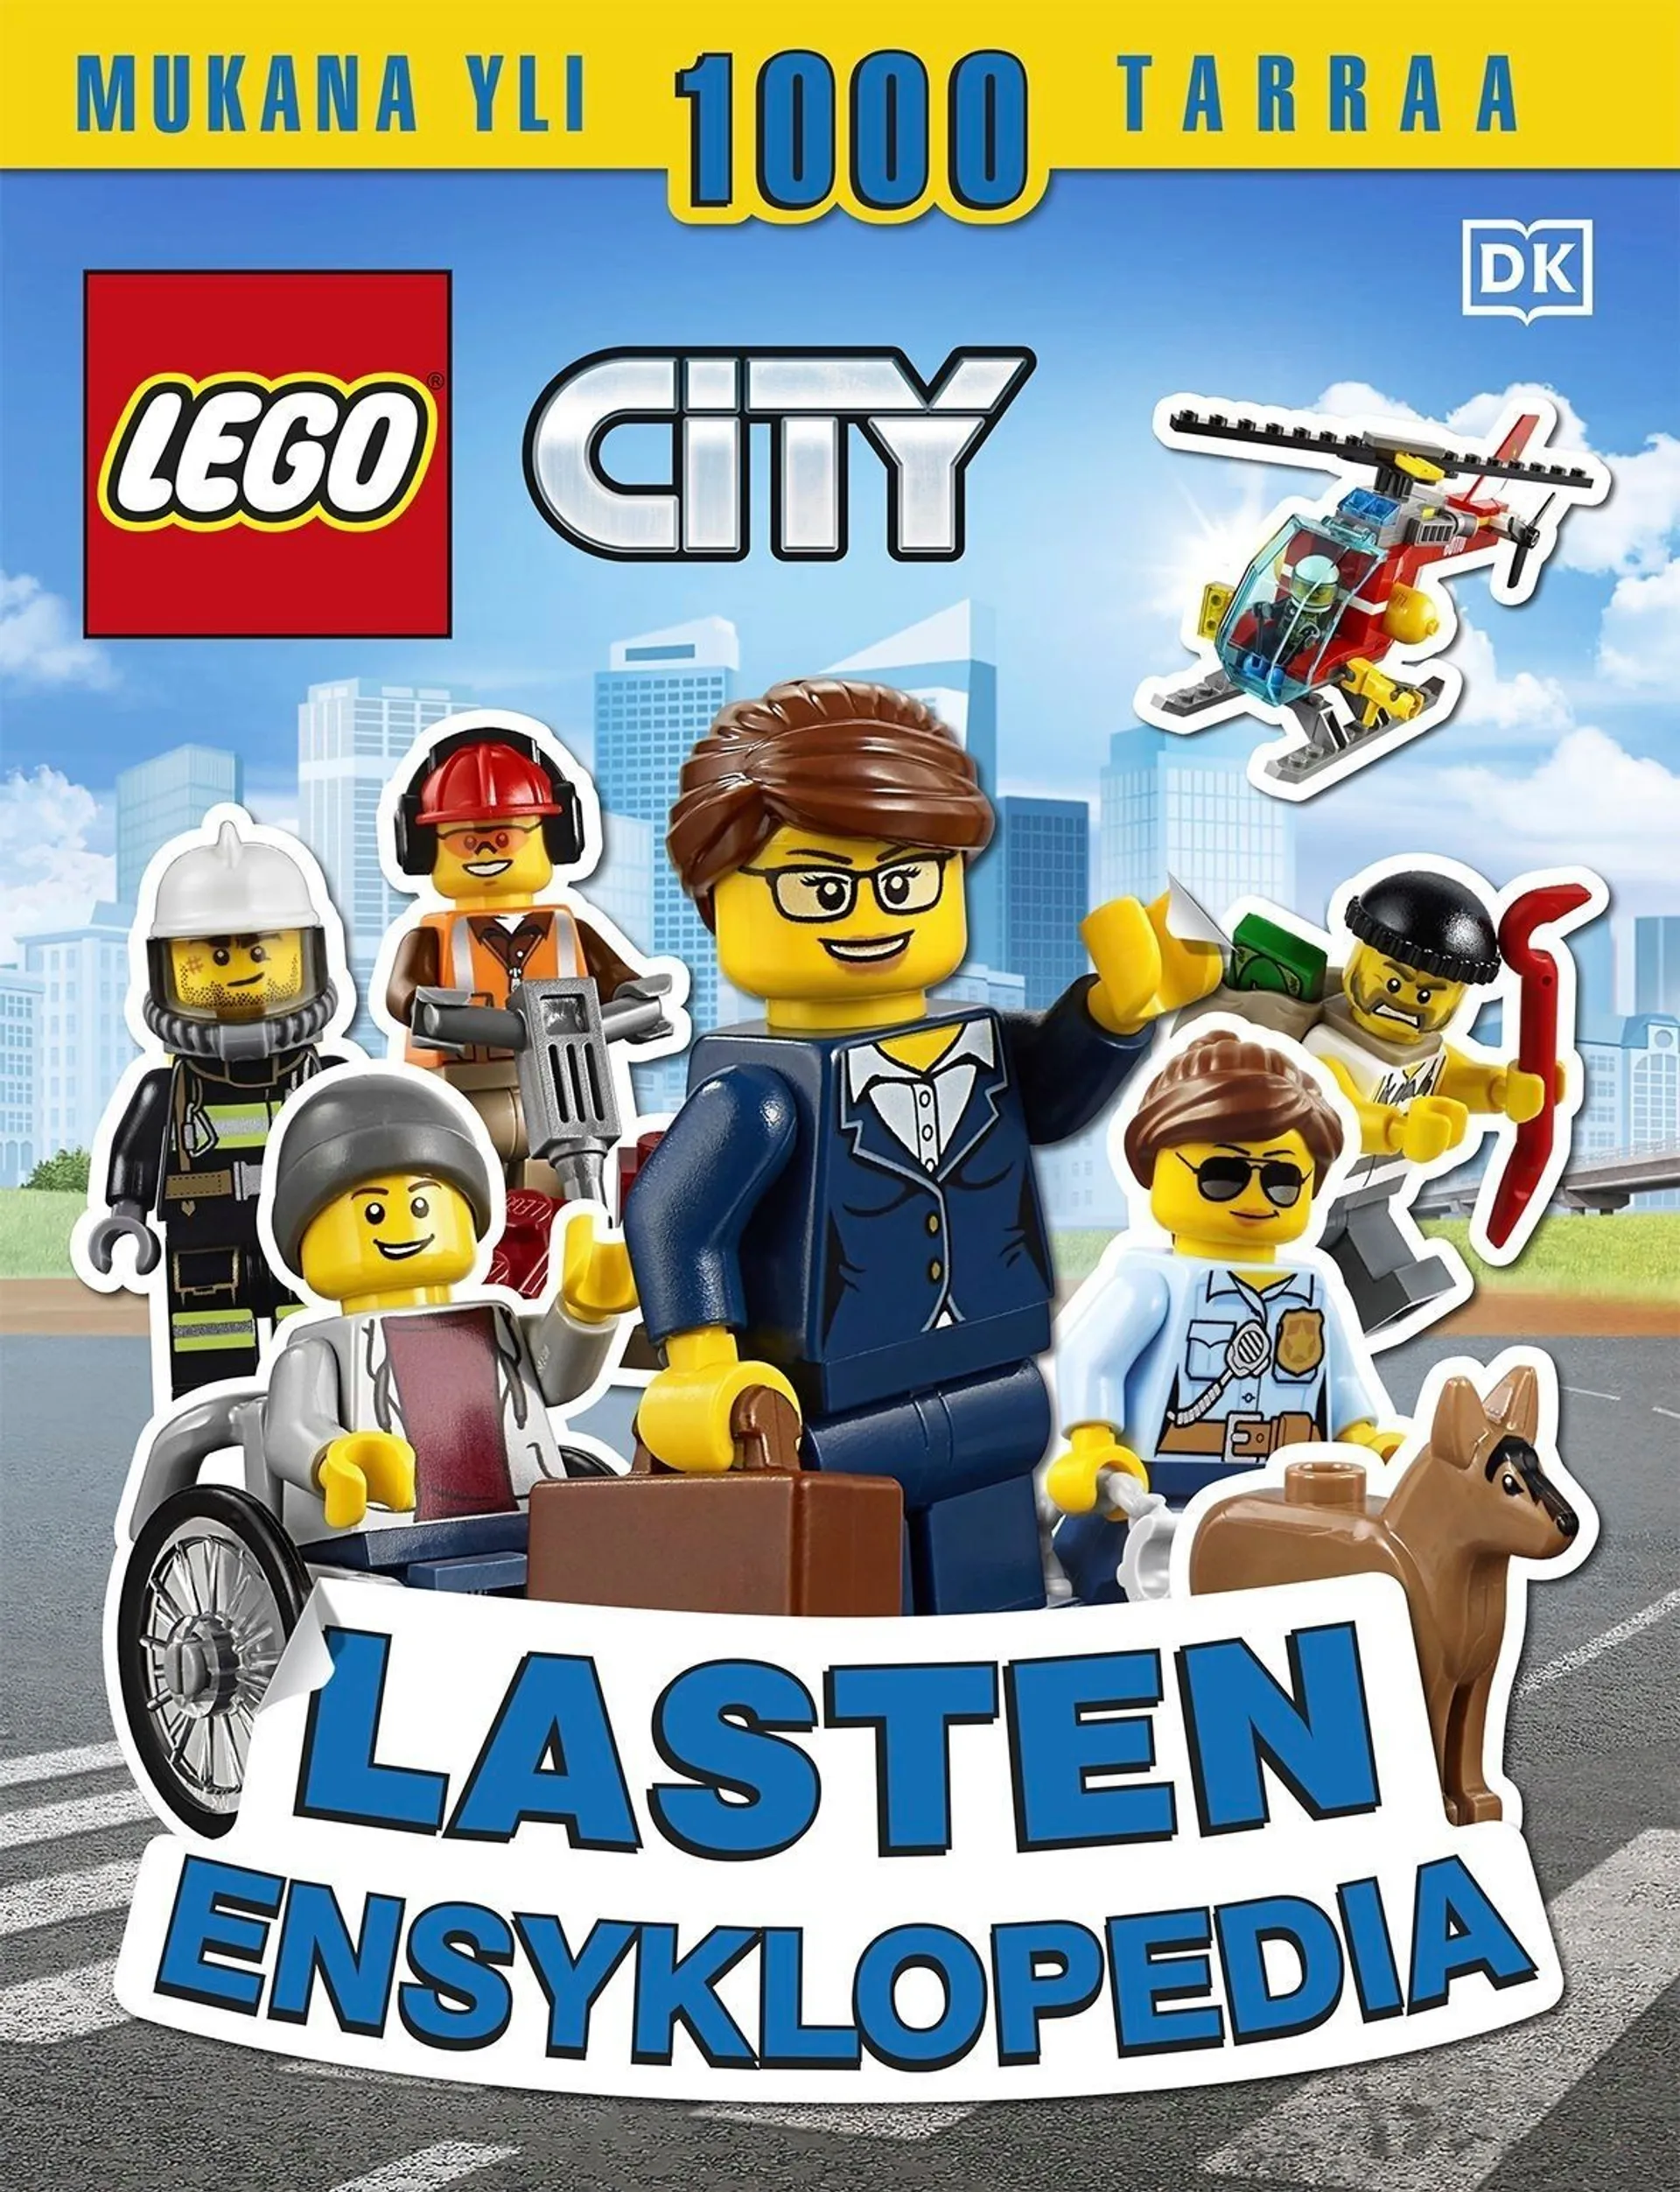 Lego City - Lasten ensyklopedia